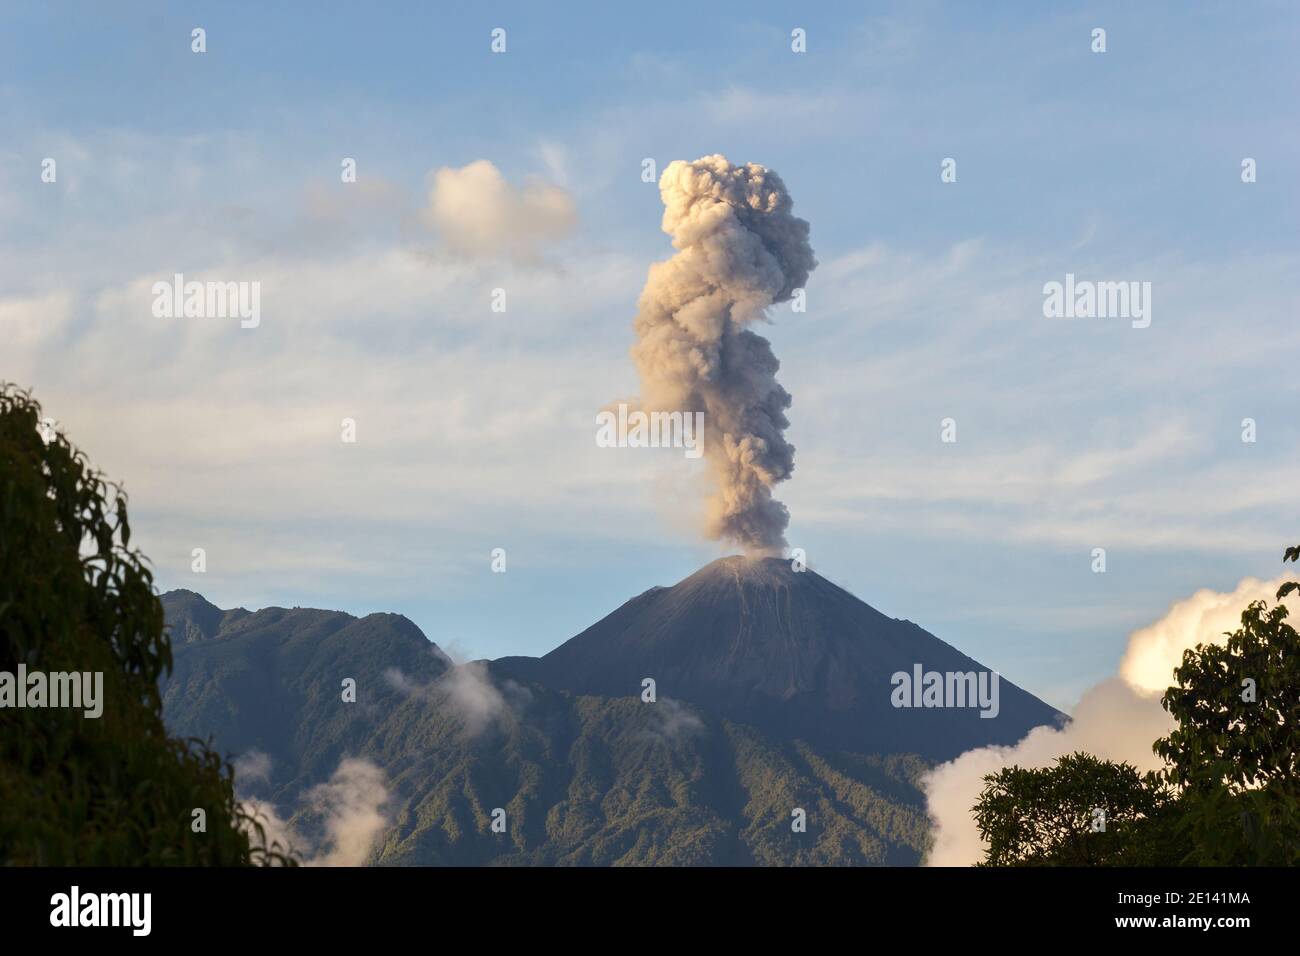 Reventador Volcano erupting, November 2015. Situated in a remote region of the Ecuadorian Amazon, Reventador has been erupting since 2002. Stock Photo